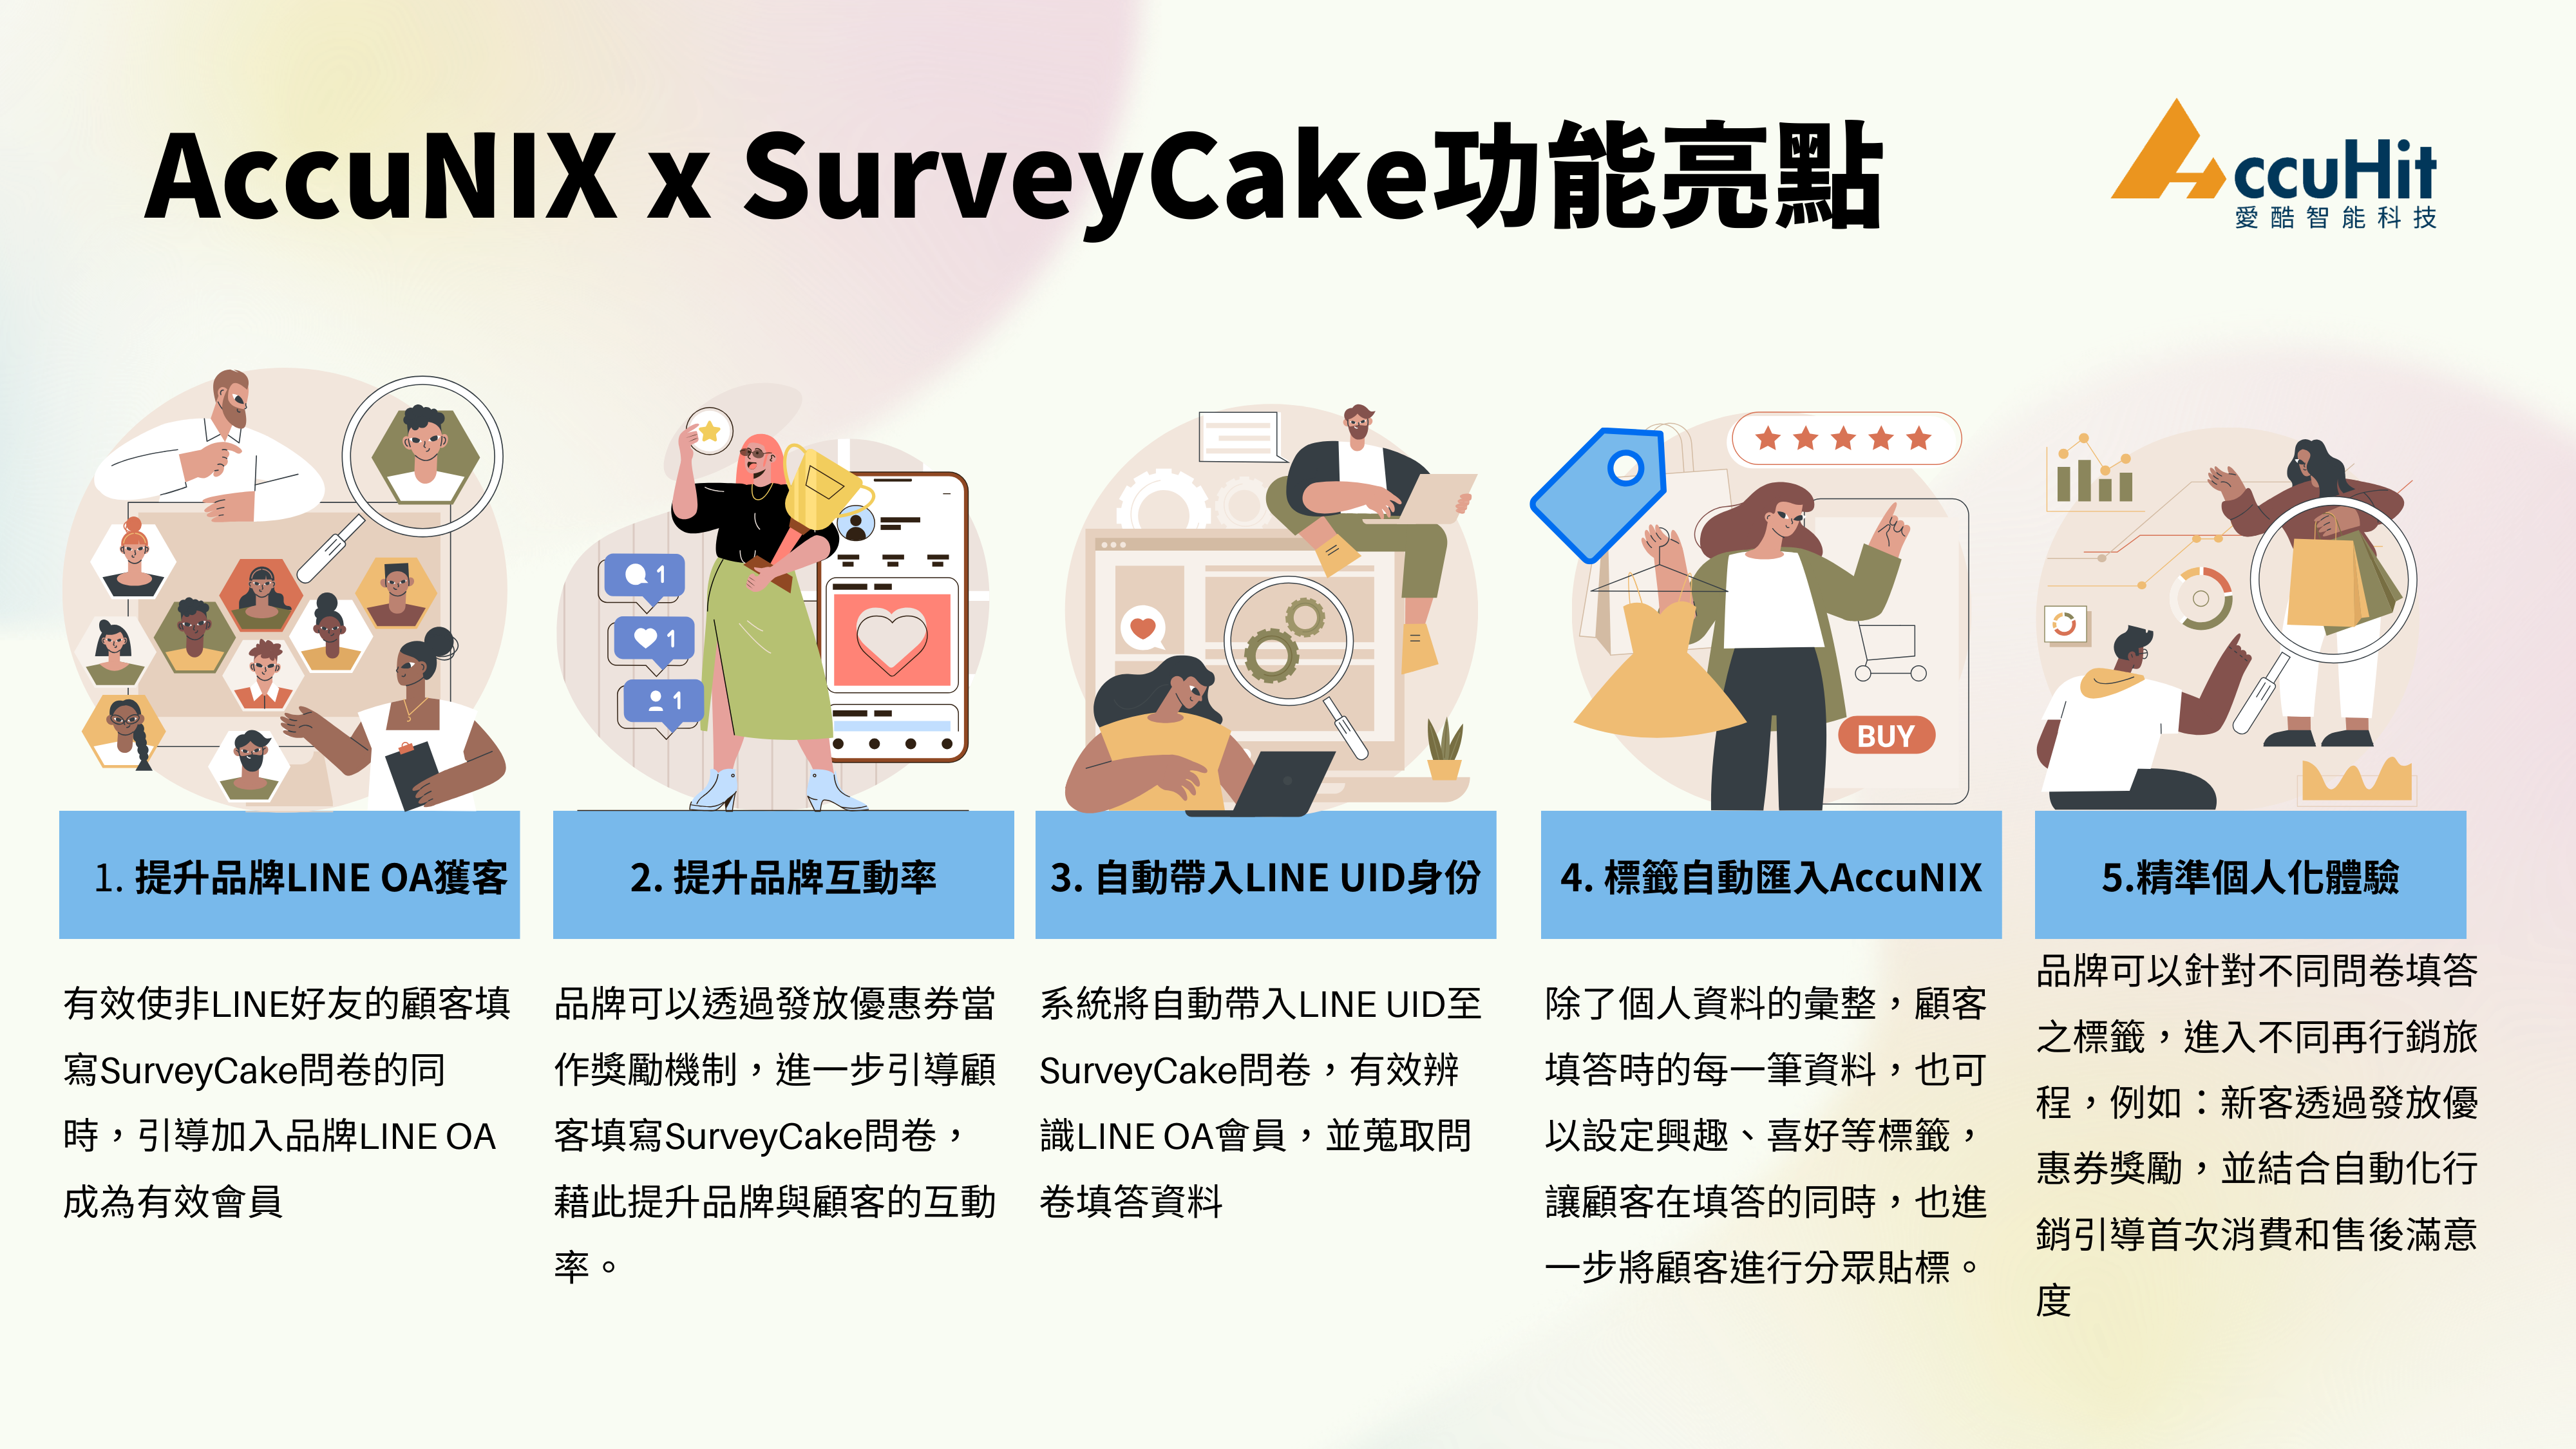 AccuNIX x SurveyCake功能亮點